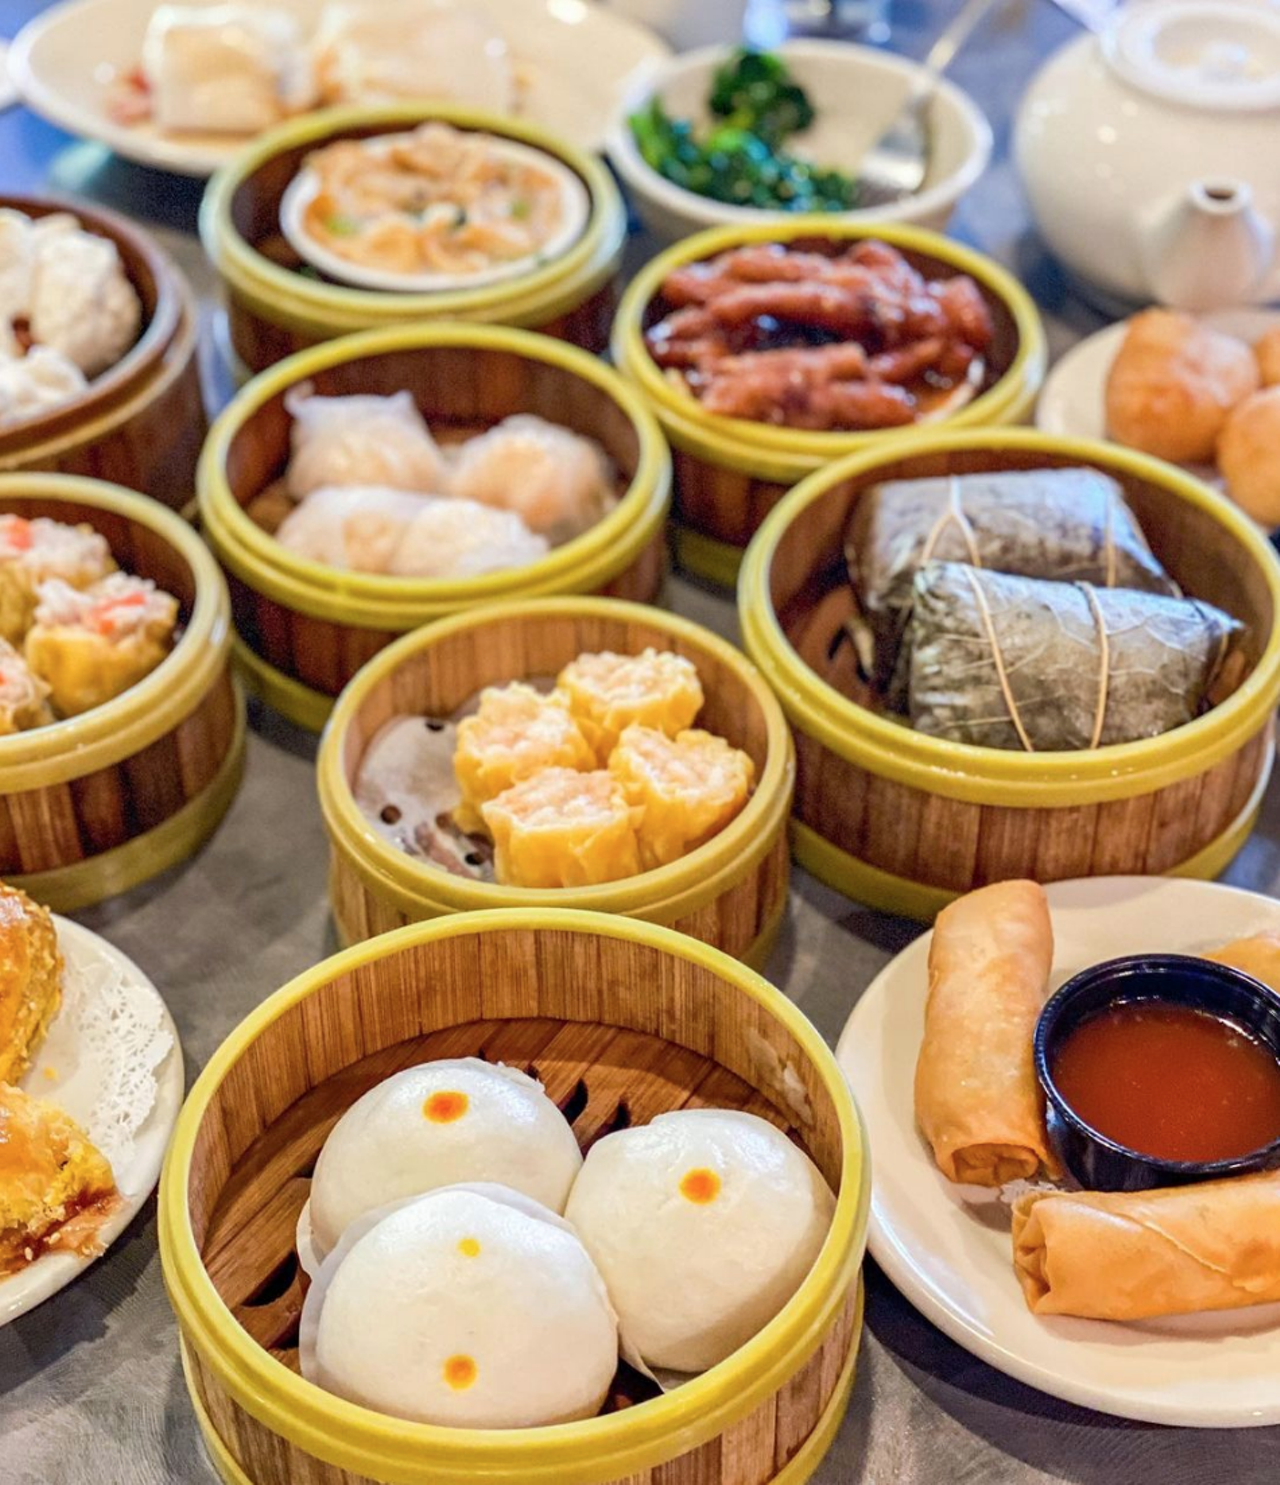 Best Chinese Restaurant
Golden Wok, Multiple locations, goldenwoksa.com
Photo via Instagram / stine.eats